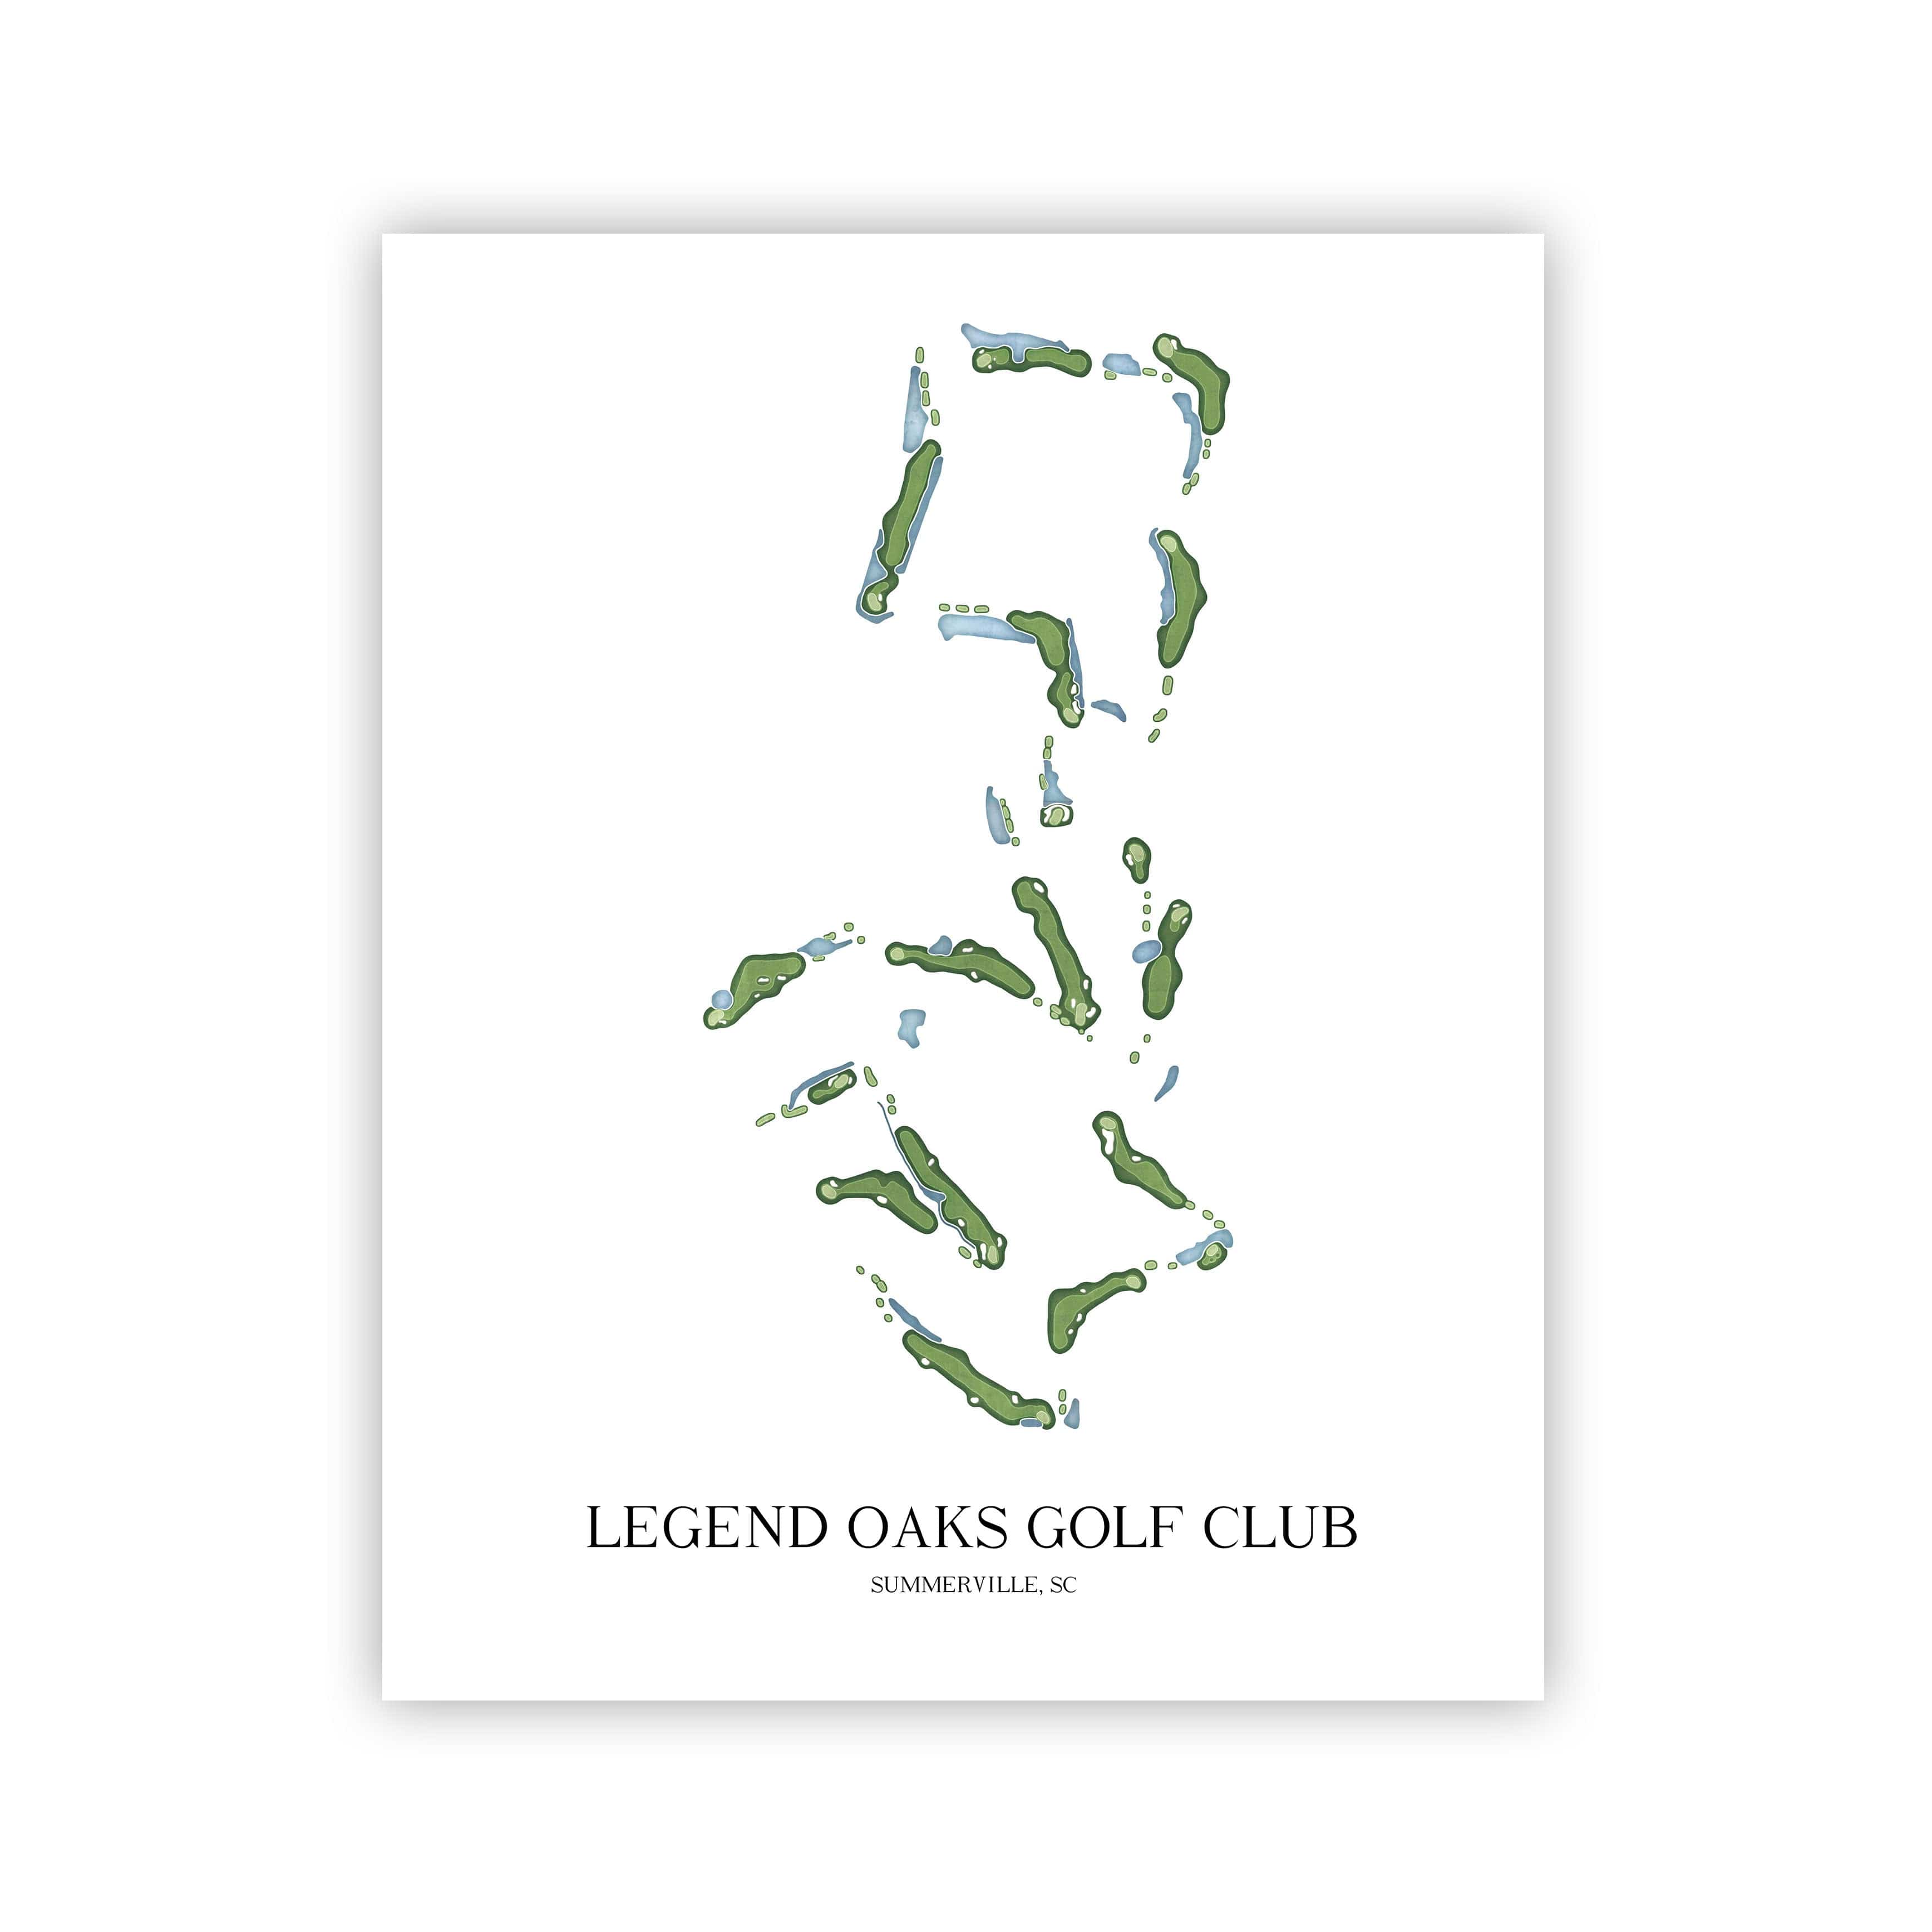 The 19th Hole Golf Shop - Golf Course Prints -  Legend Oaks Golf Club Golf Course Map